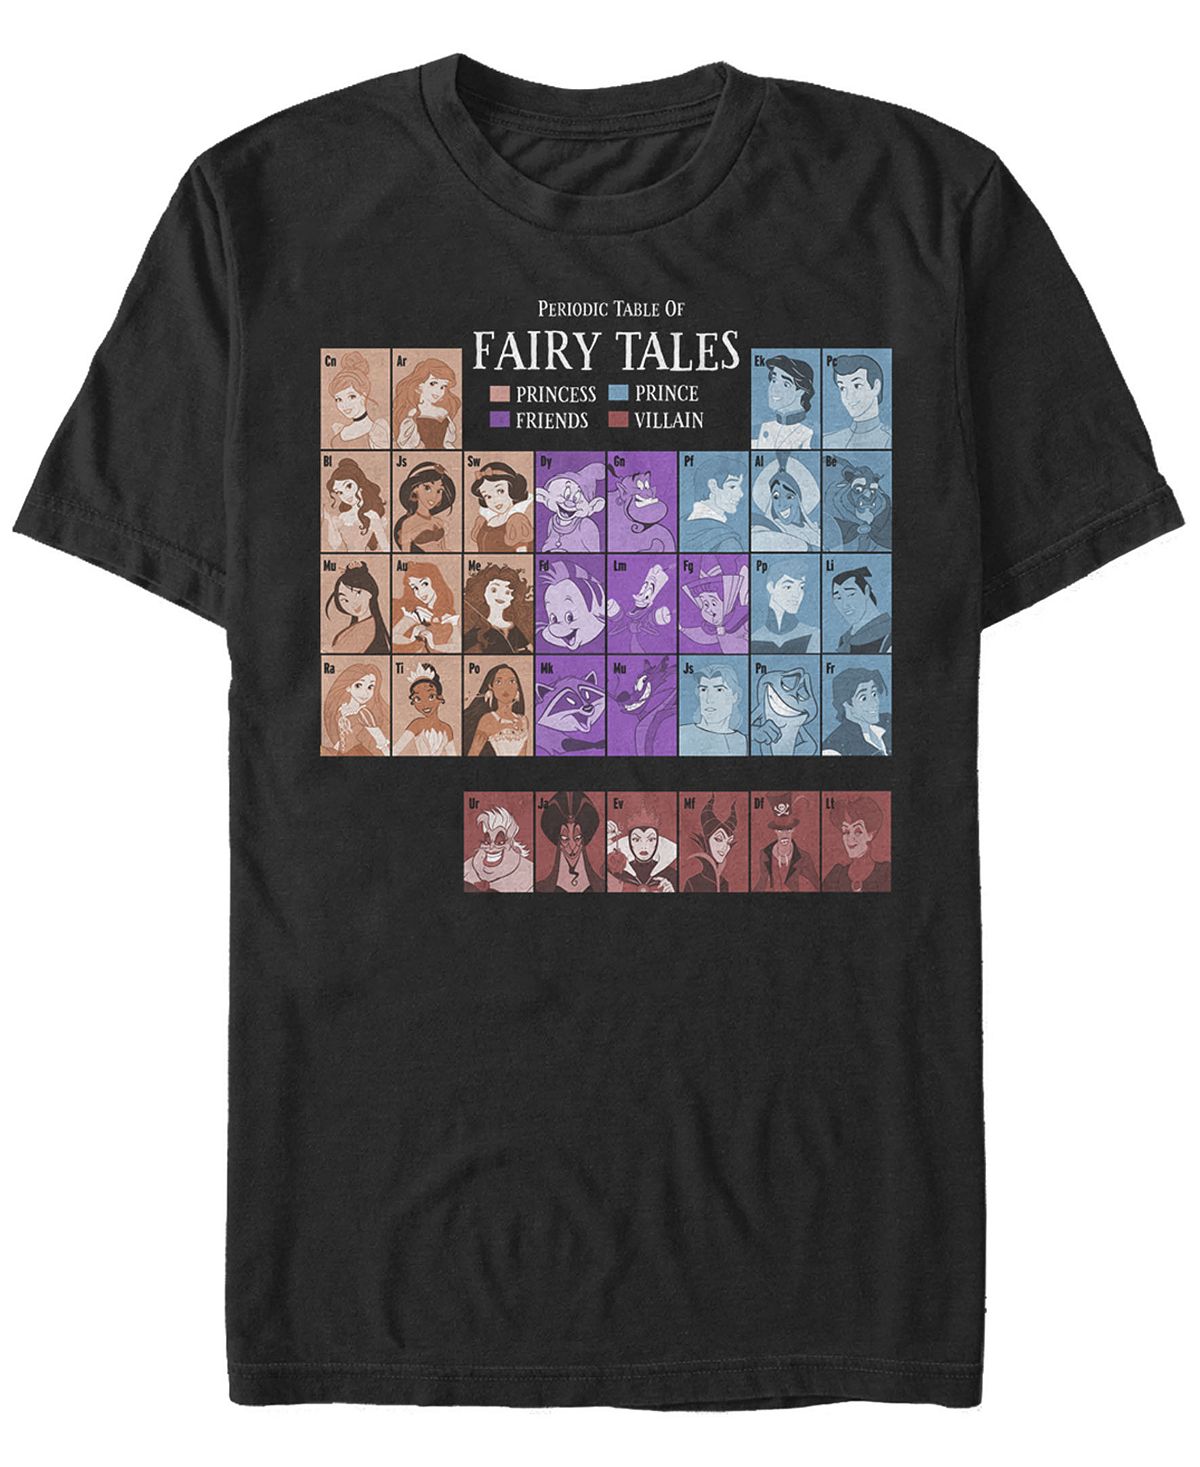 цена Мужская футболка с короткими рукавами princess periodic table of fairy tales Fifth Sun, черный